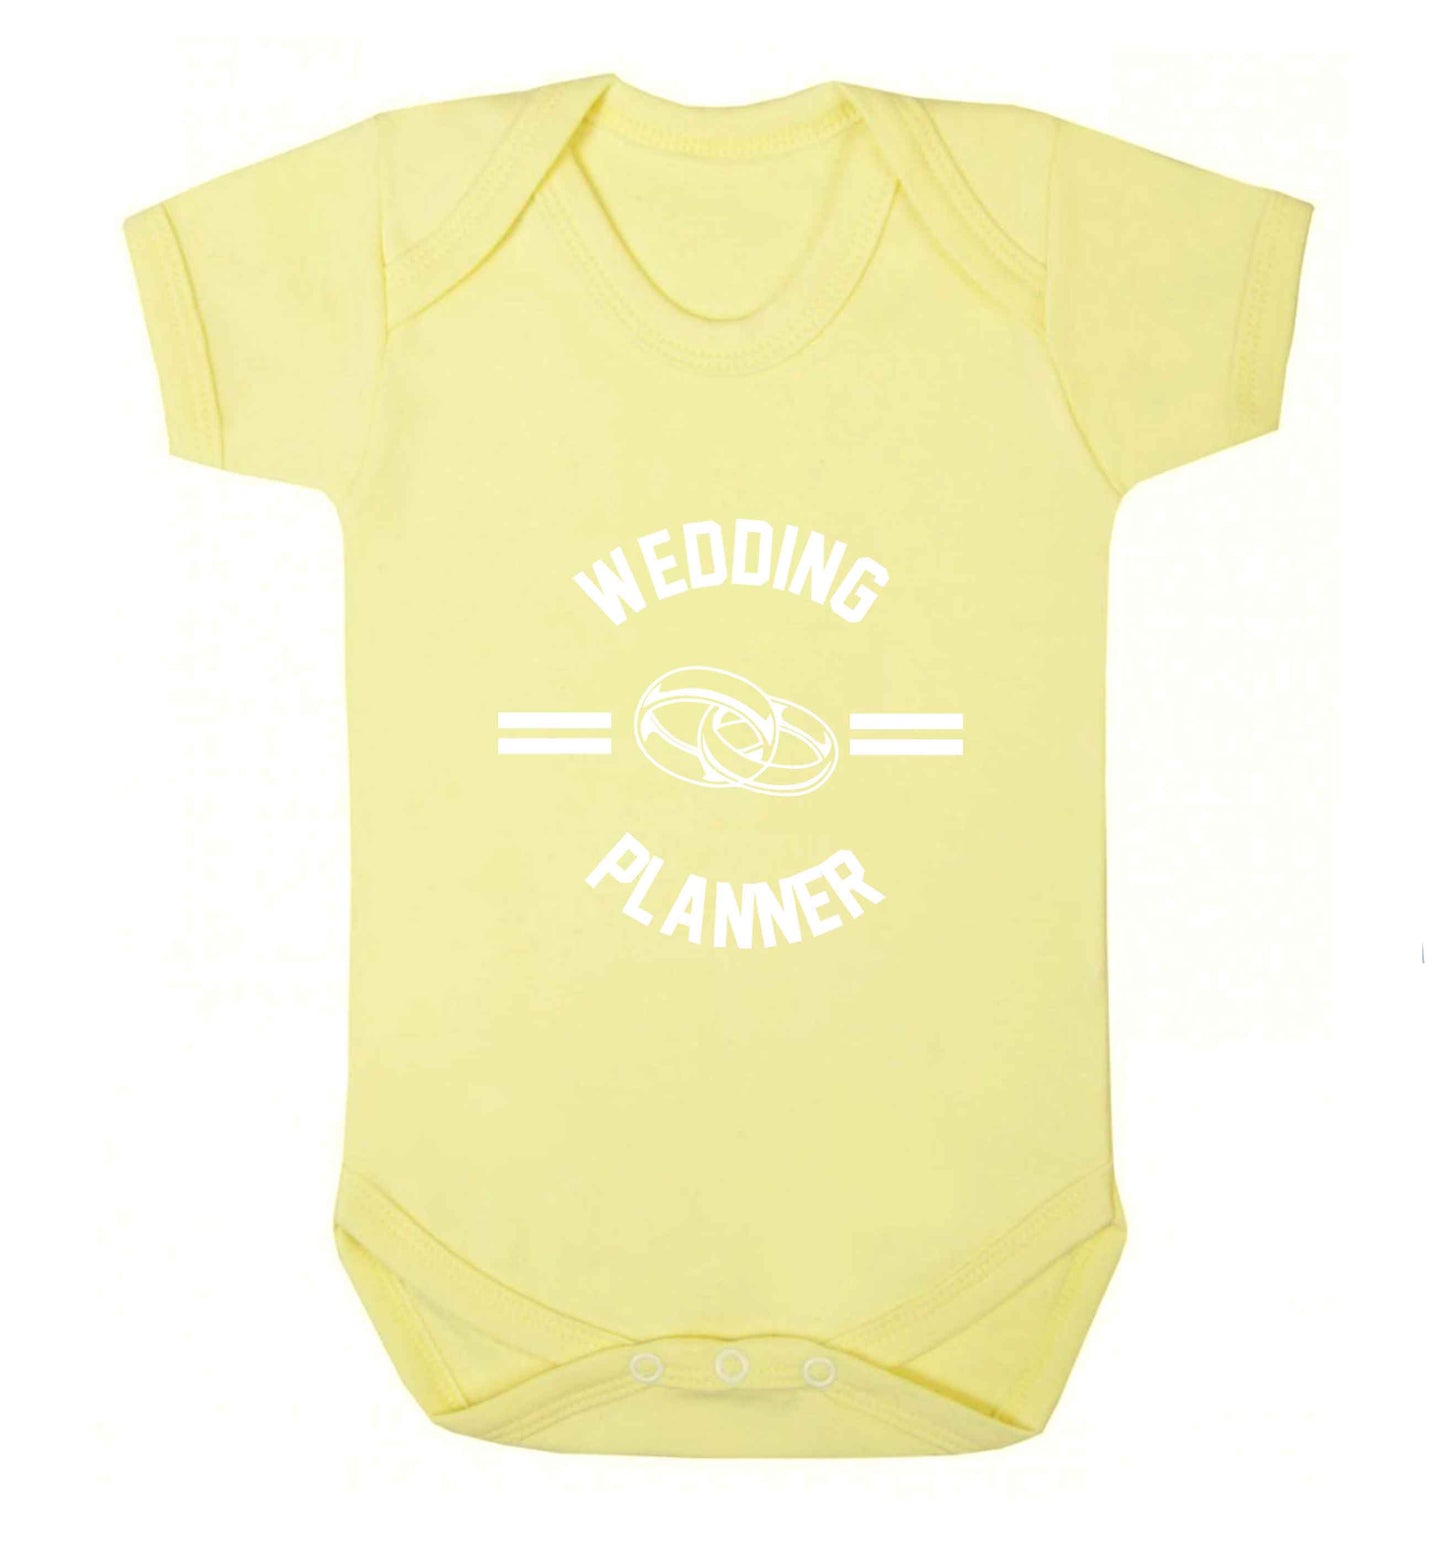 Wedding planner baby vest pale yellow 18-24 months